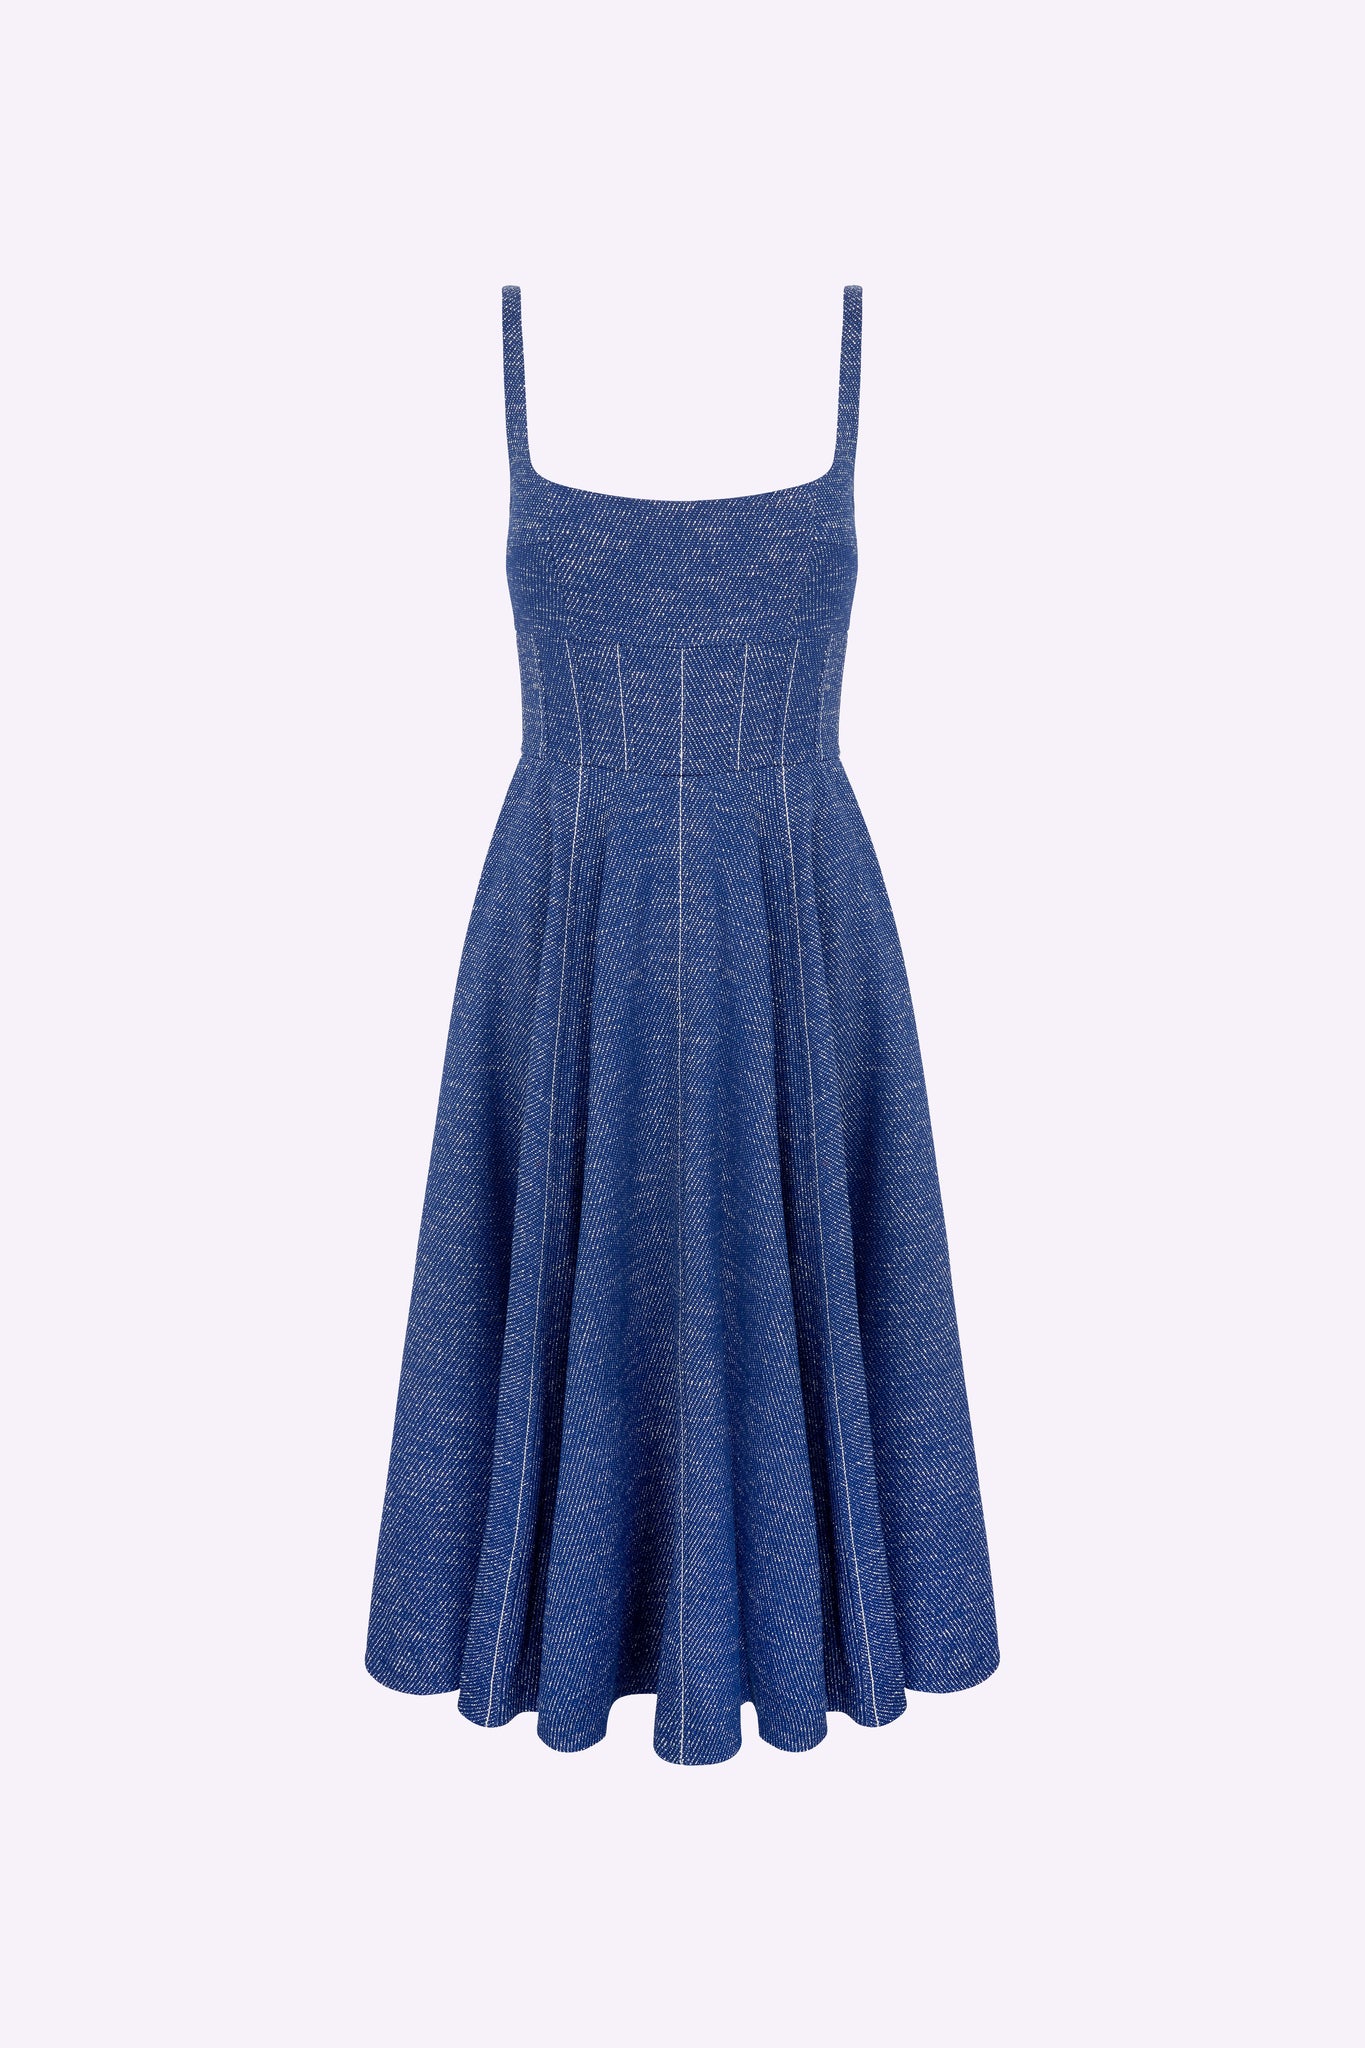 Mona Dress | Denim Fit-and-Flare Denim Dress | Emilia Wickstead